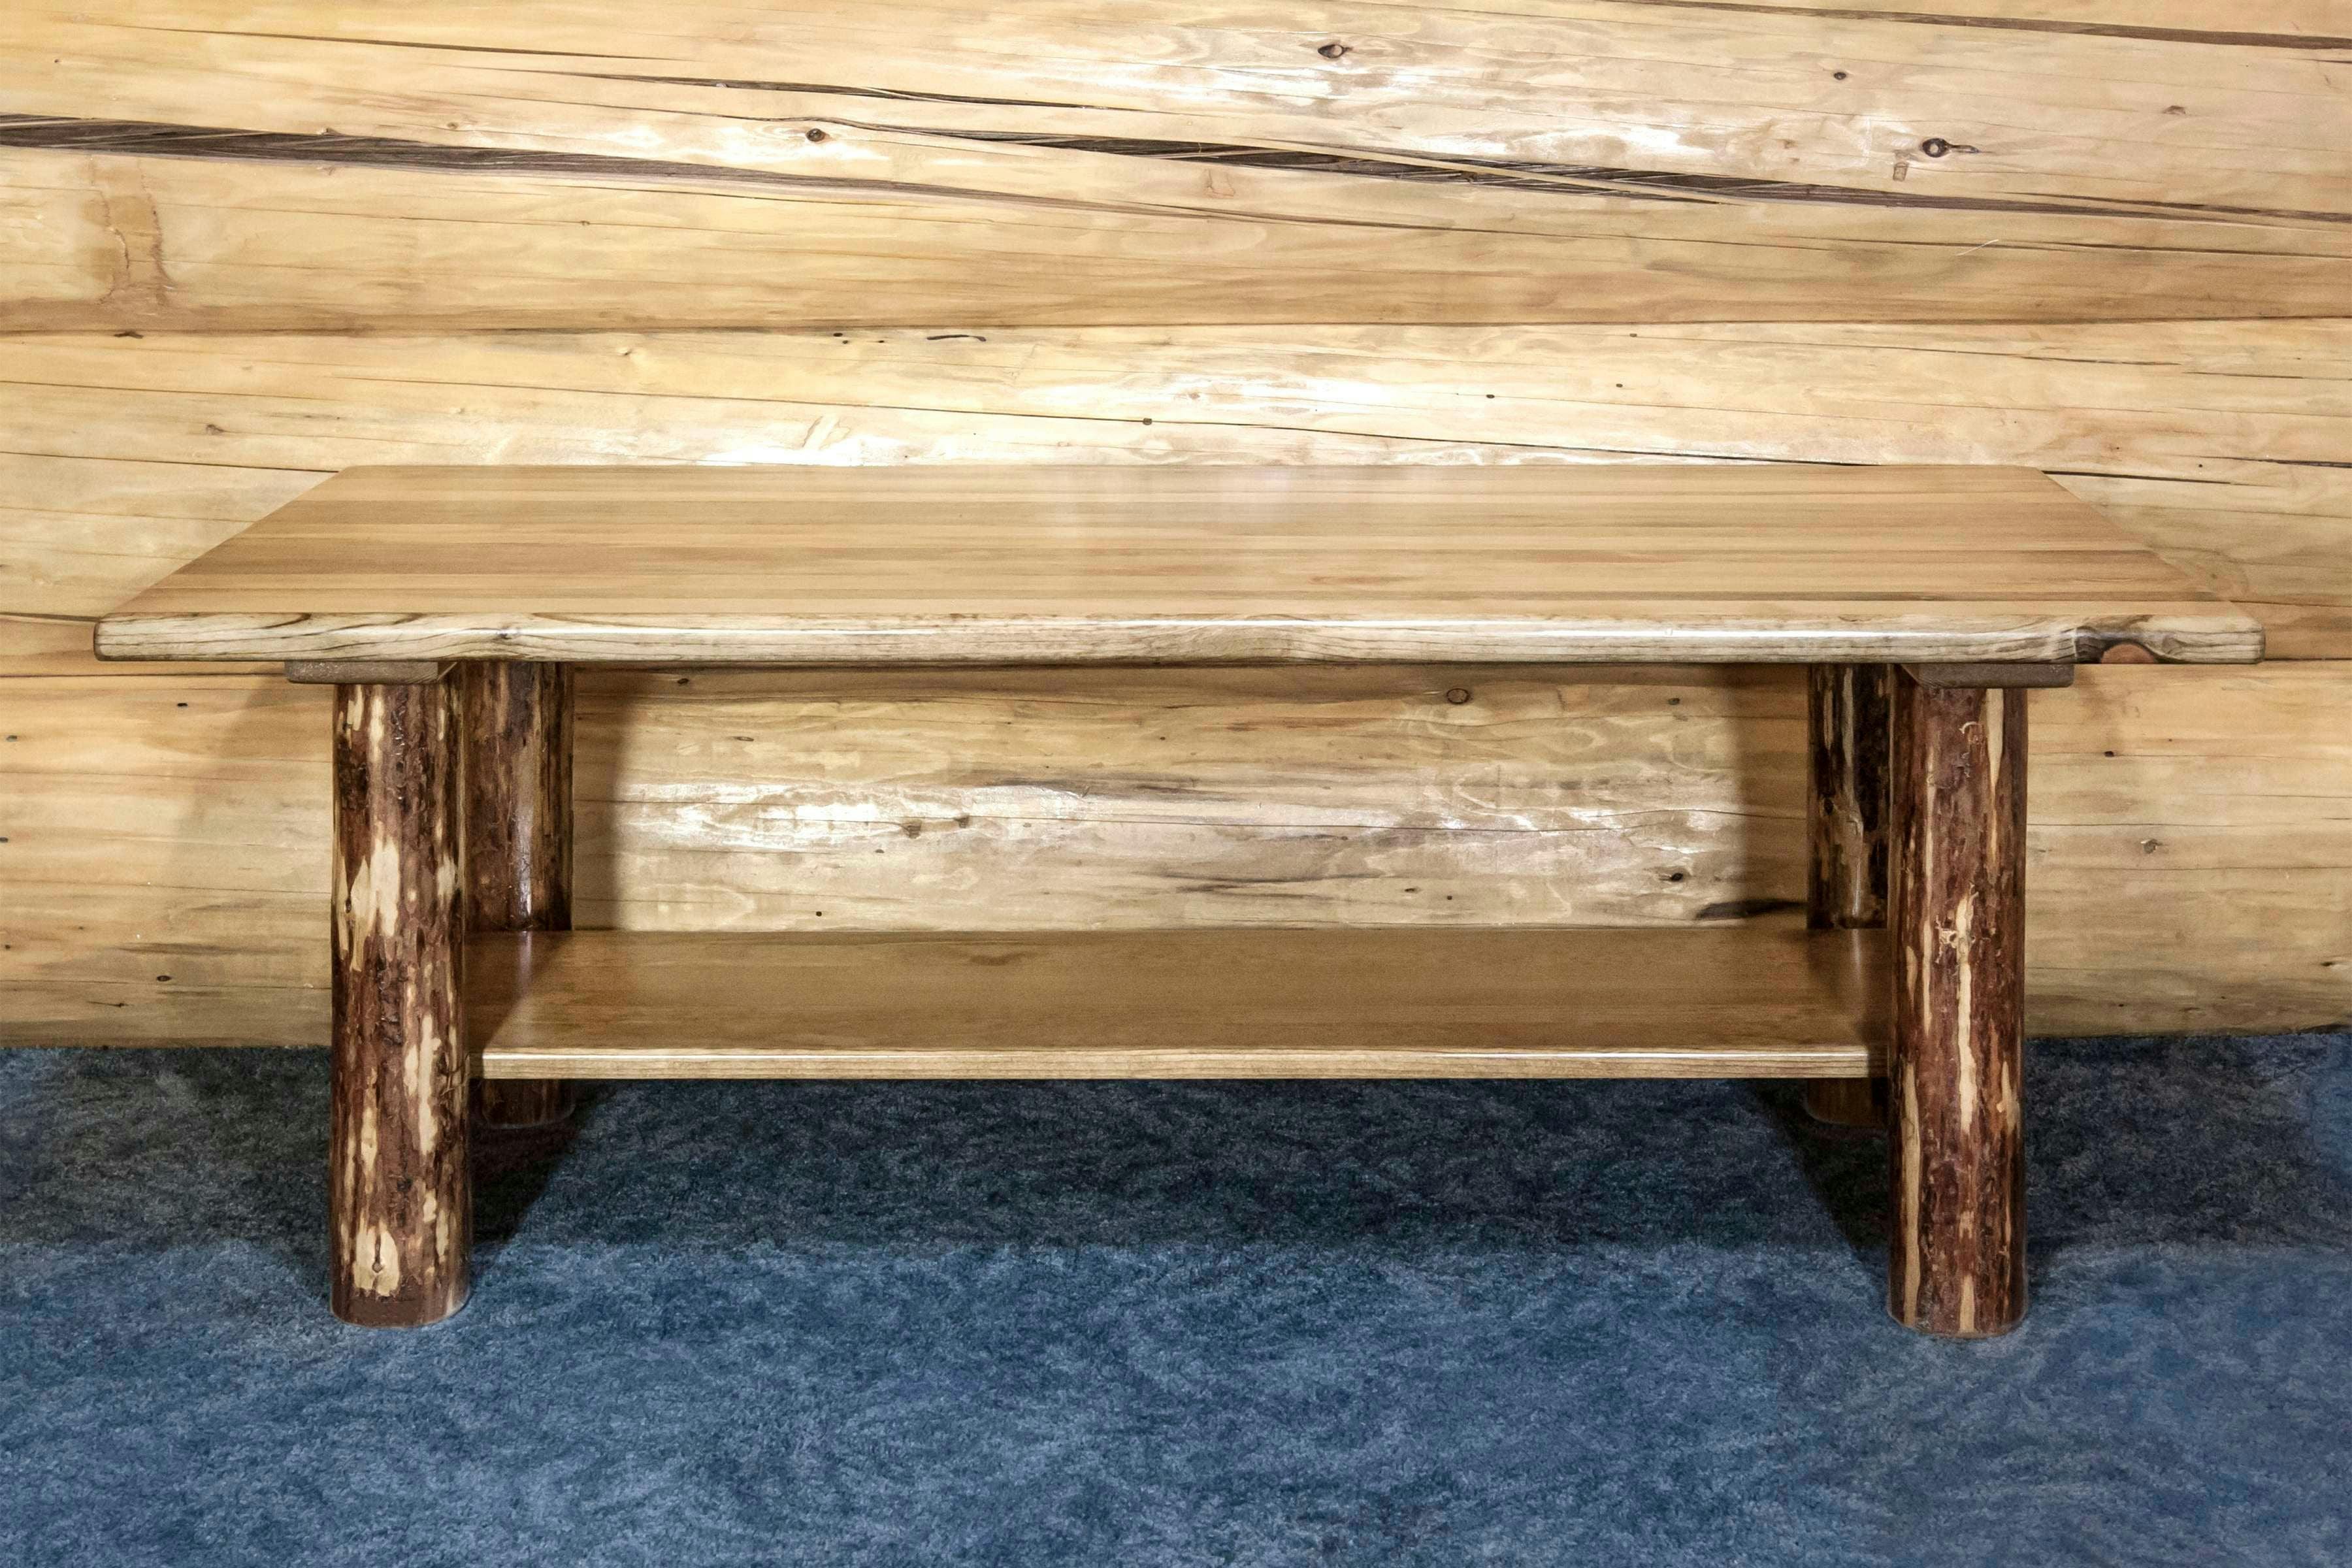 Puritan Pine Rectangular Coffee Table with Underneath Storage